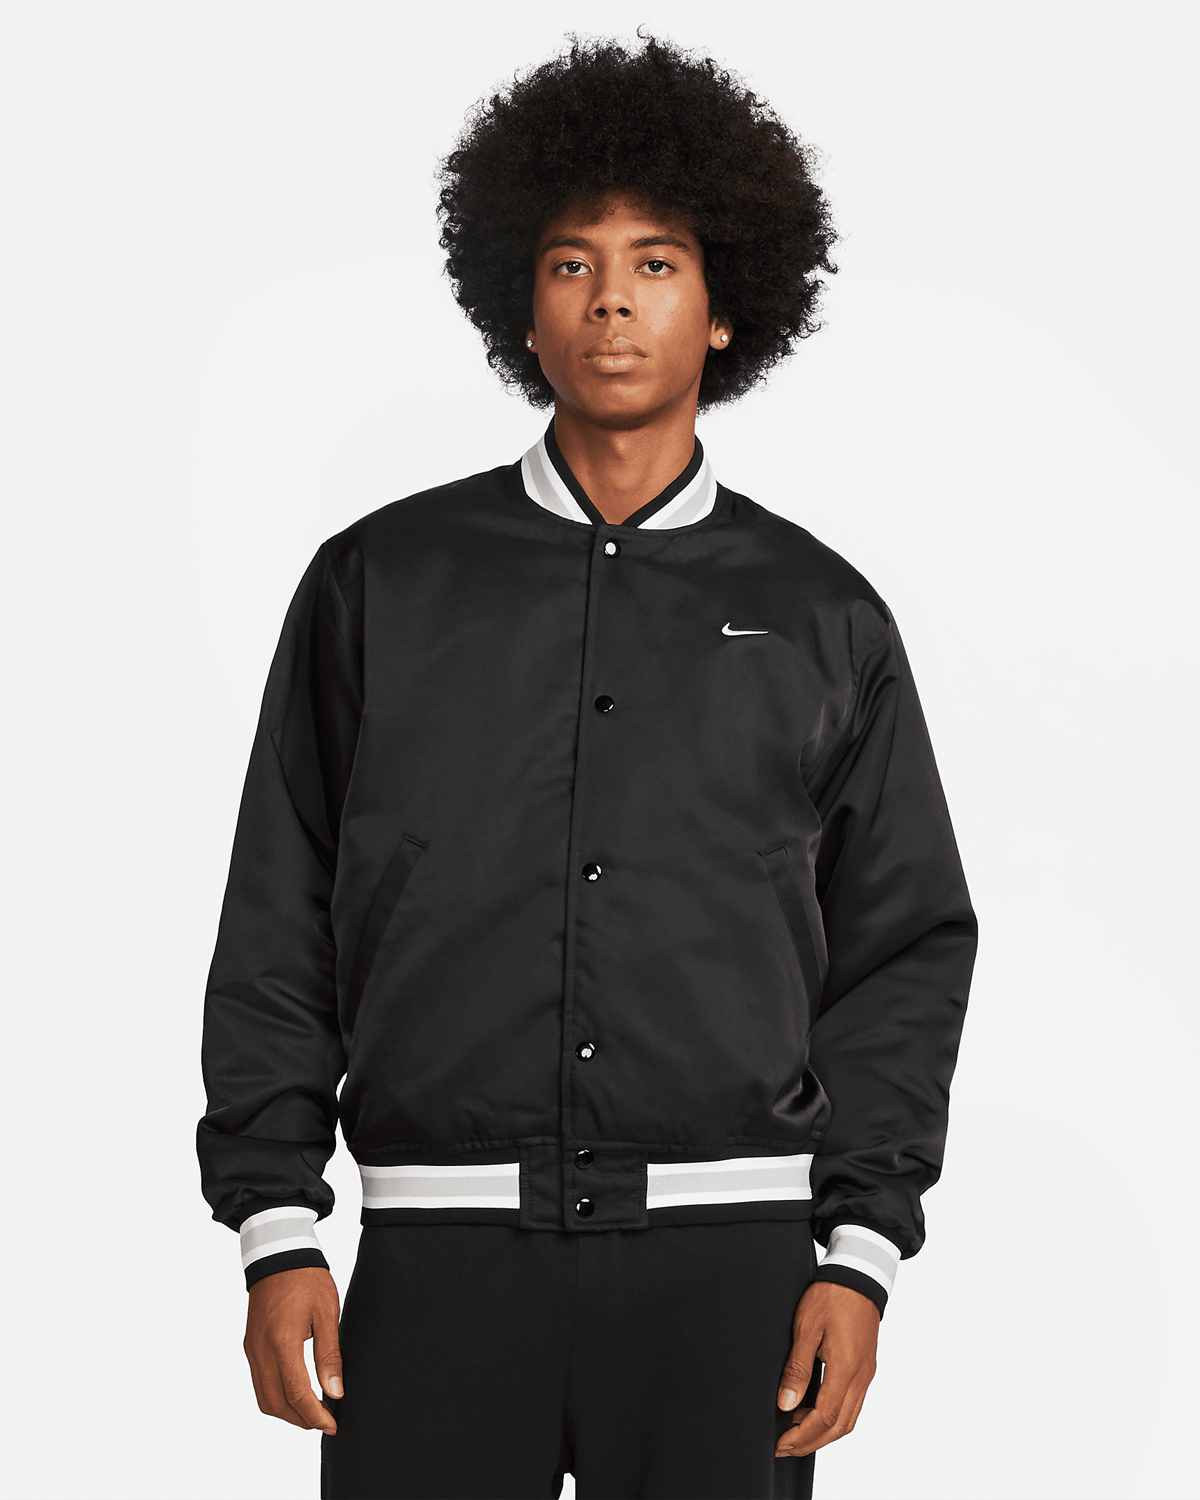 Nike-Authentics-Dugout-Jacket-Black-White